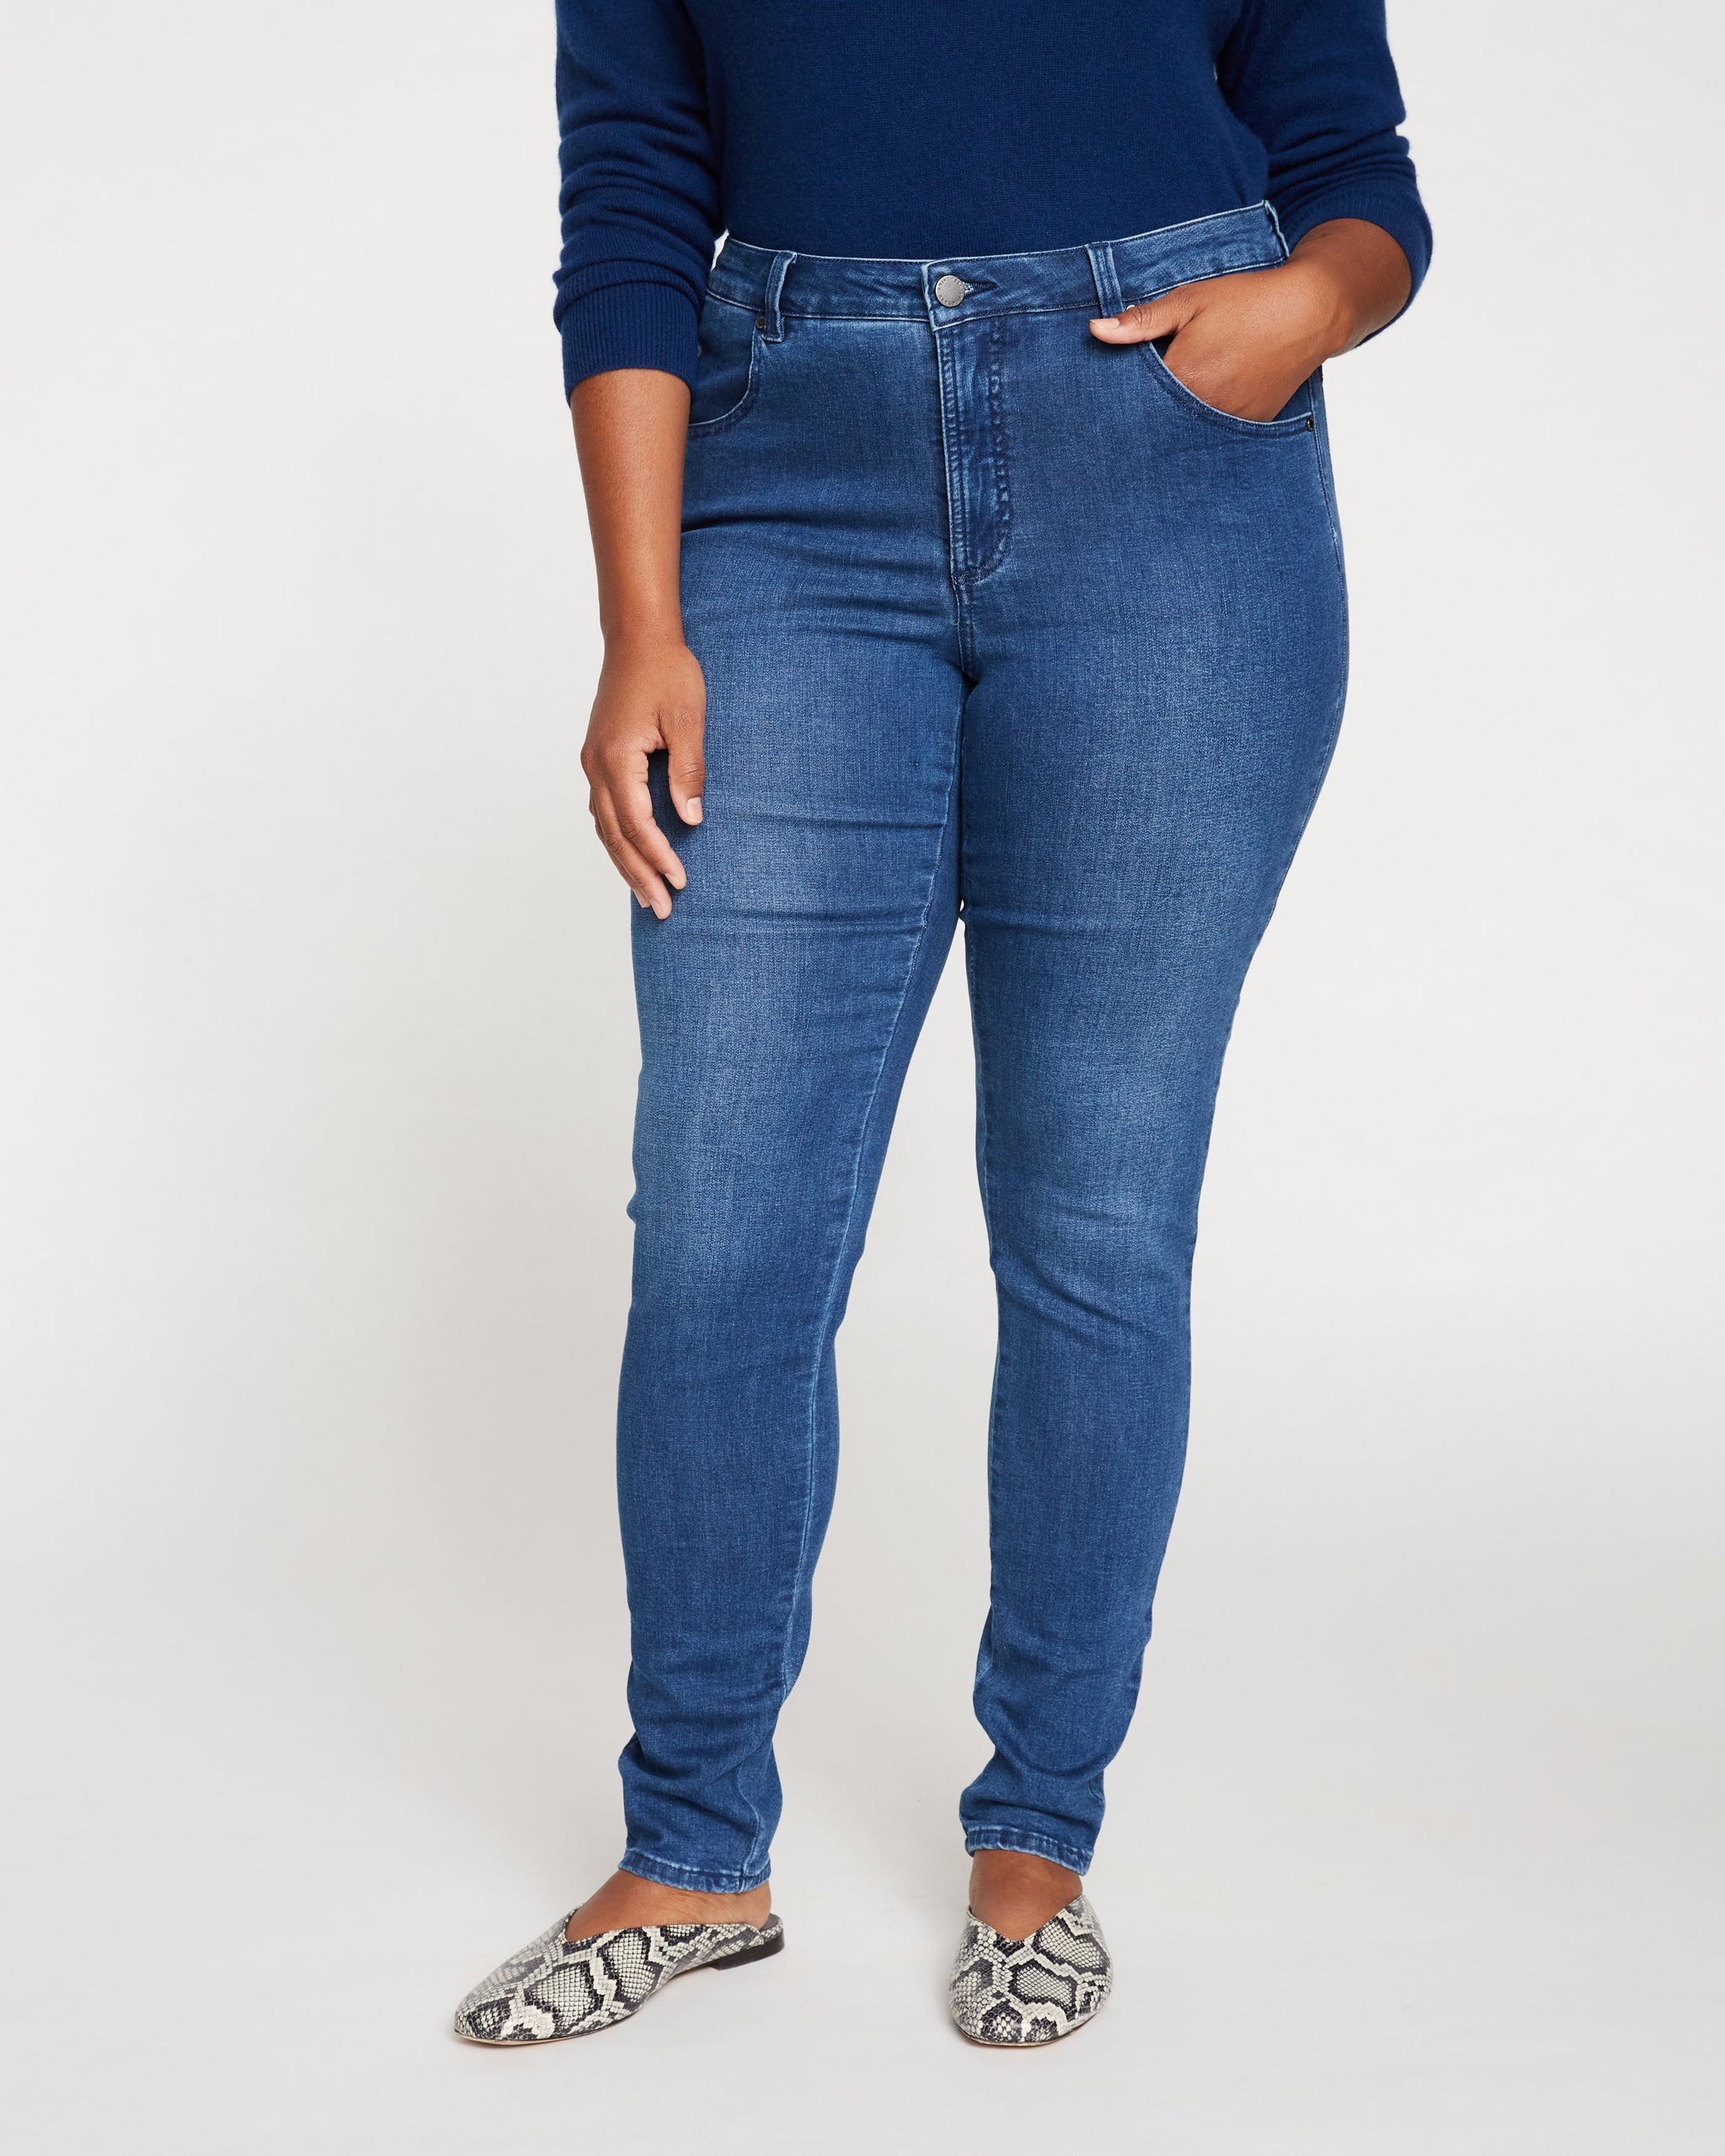 Seine Rise Skinny Jeans 32 Inch - True Blue | Universal Standard